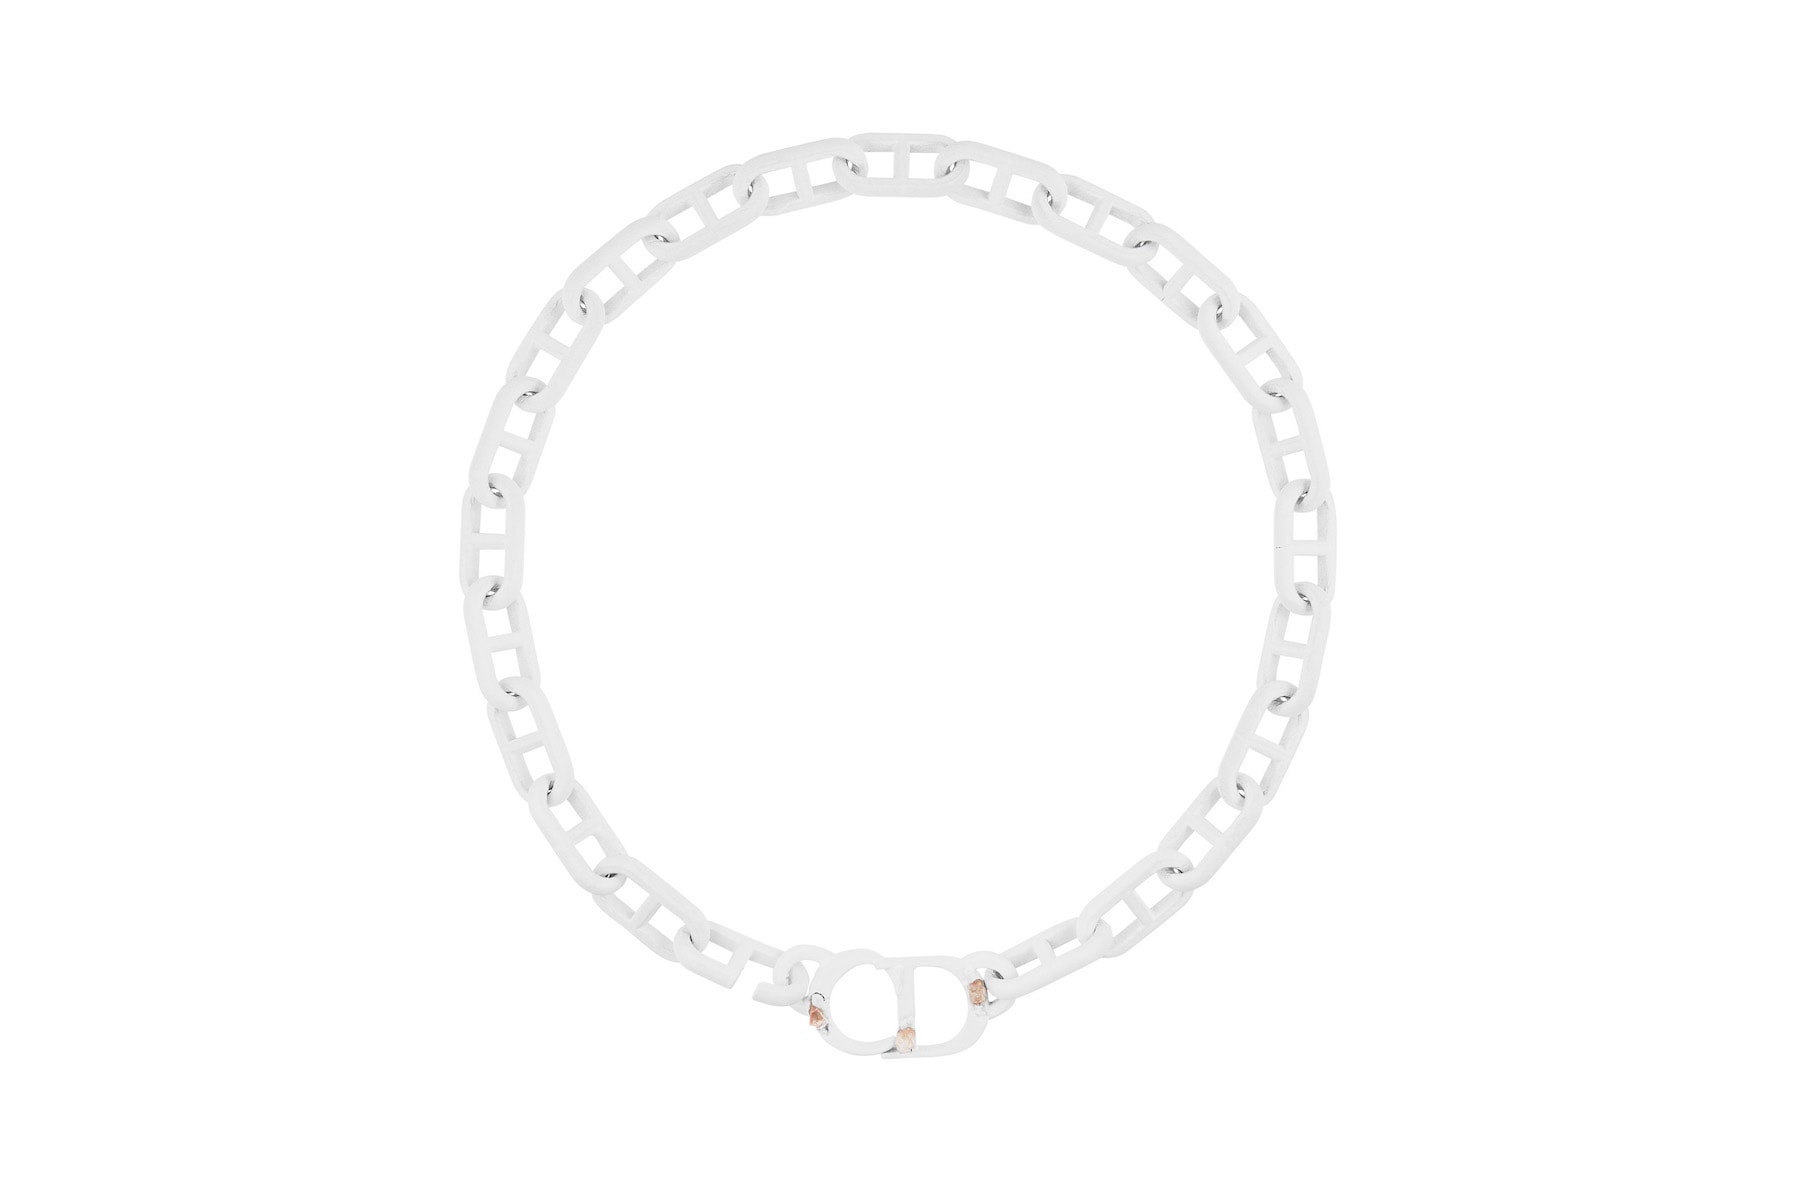 Dior Kim Jones Daniel Arsham Jewelry SS20 Drop Collection Bracelet Necklace